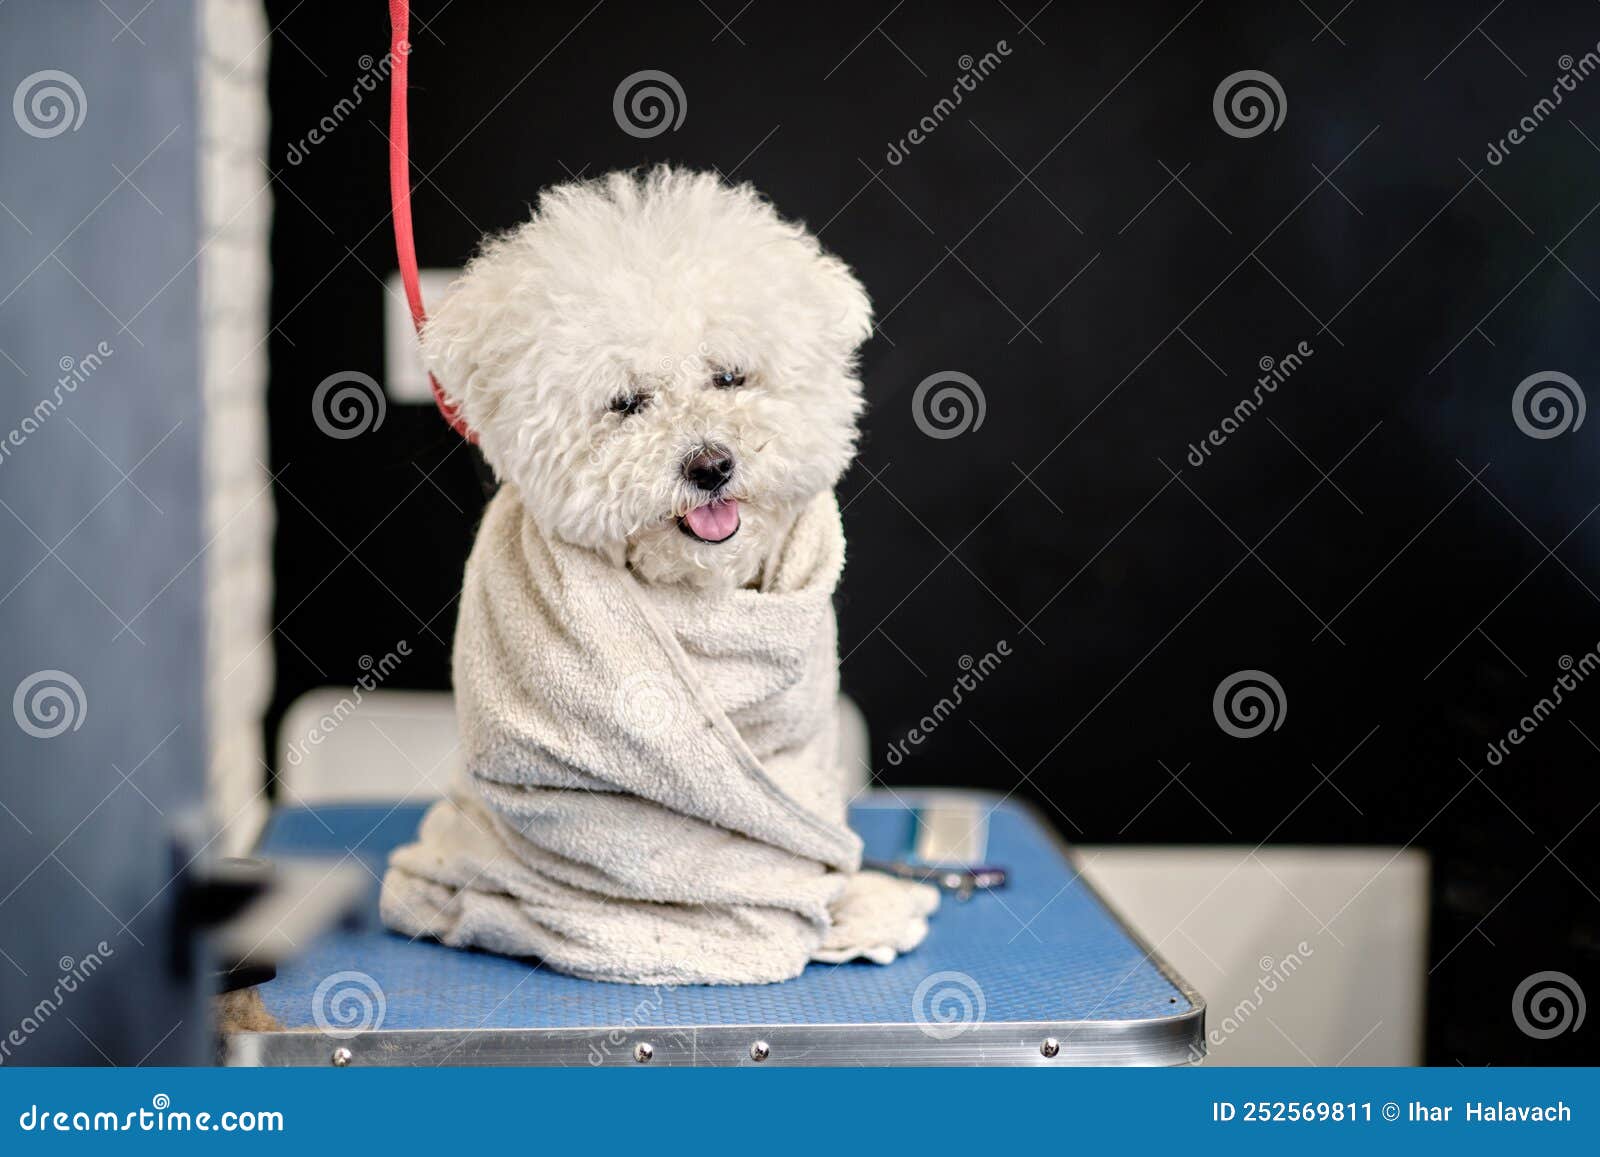 how do you bathe a bichon frise puppy